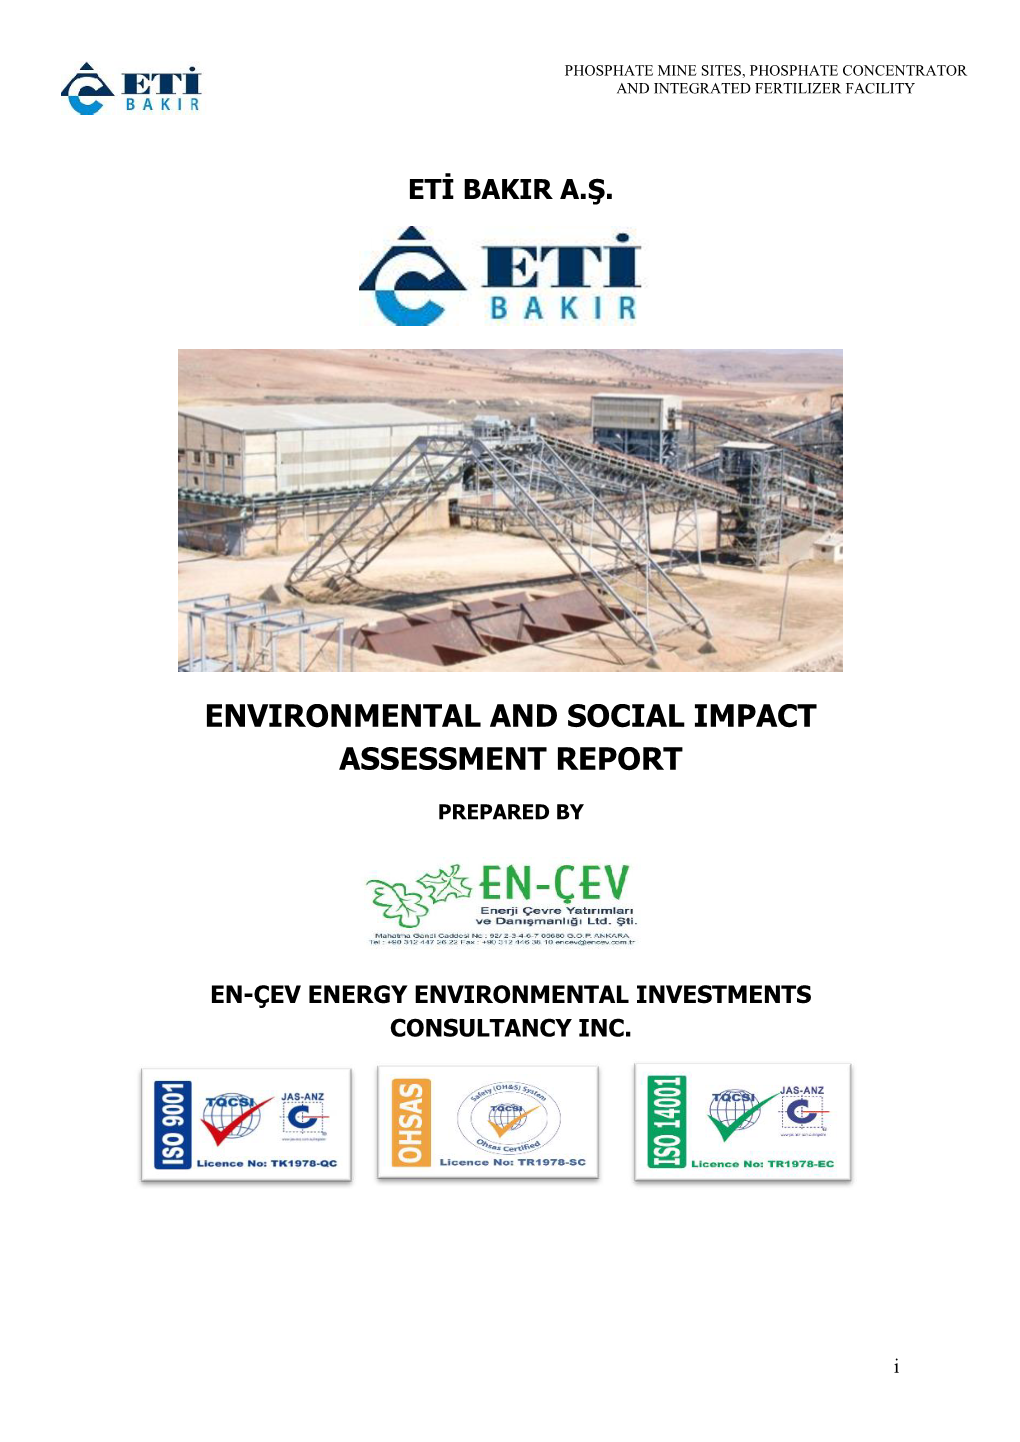 Environmental and Social Impact Assessment Report